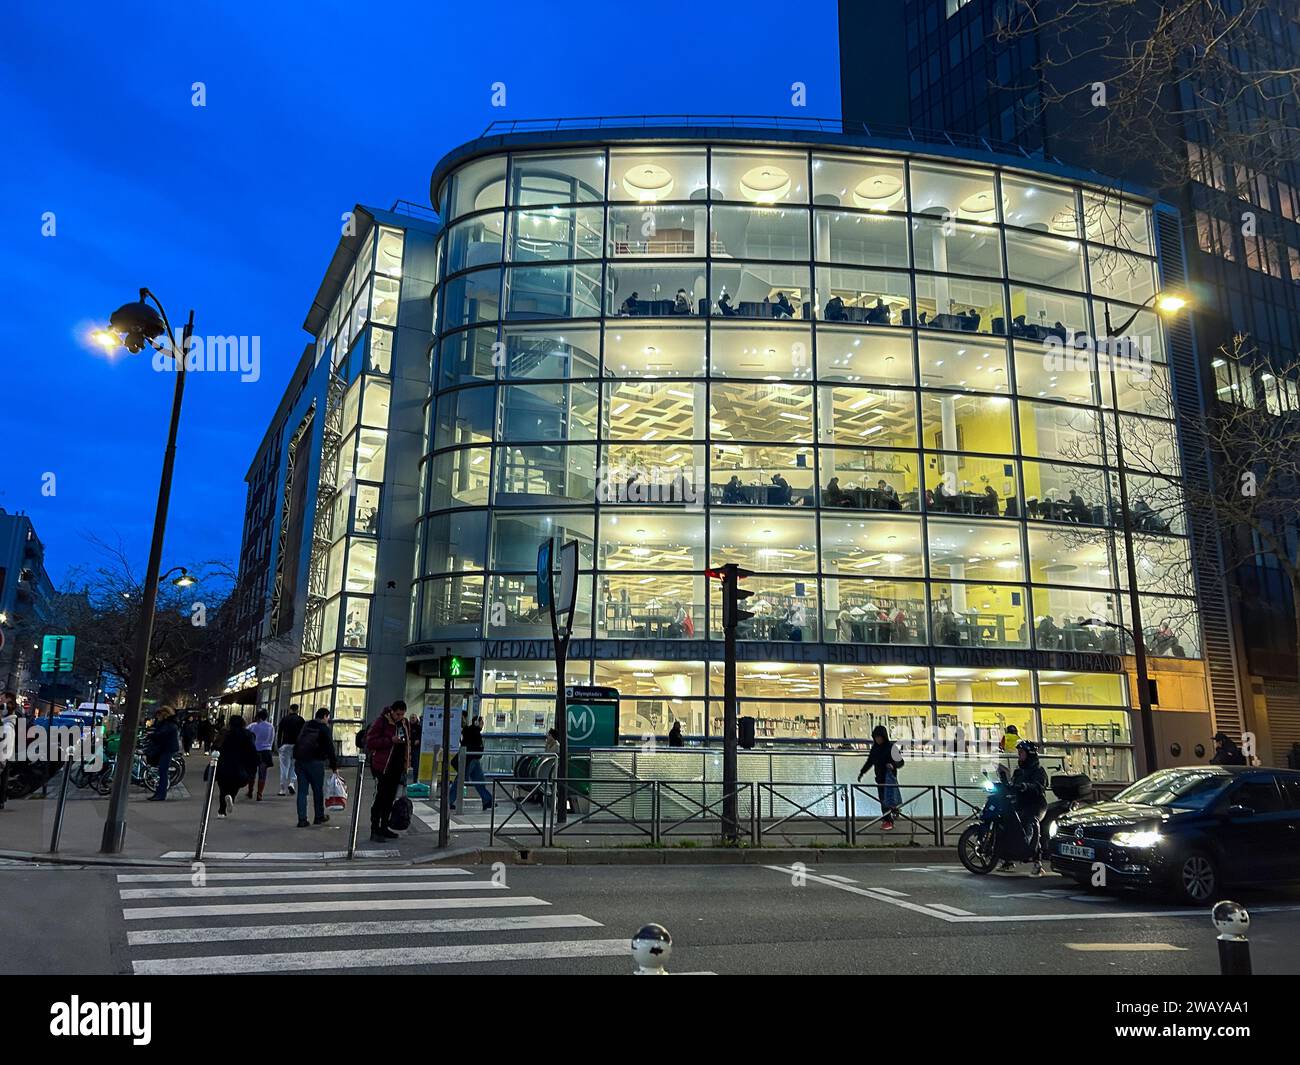 Parigi, Francia, veduta notturna dall'esterno, architettura moderna, Biblioteca pubblica, scena di strada "Jean-Pierre Melville" Foto Stock